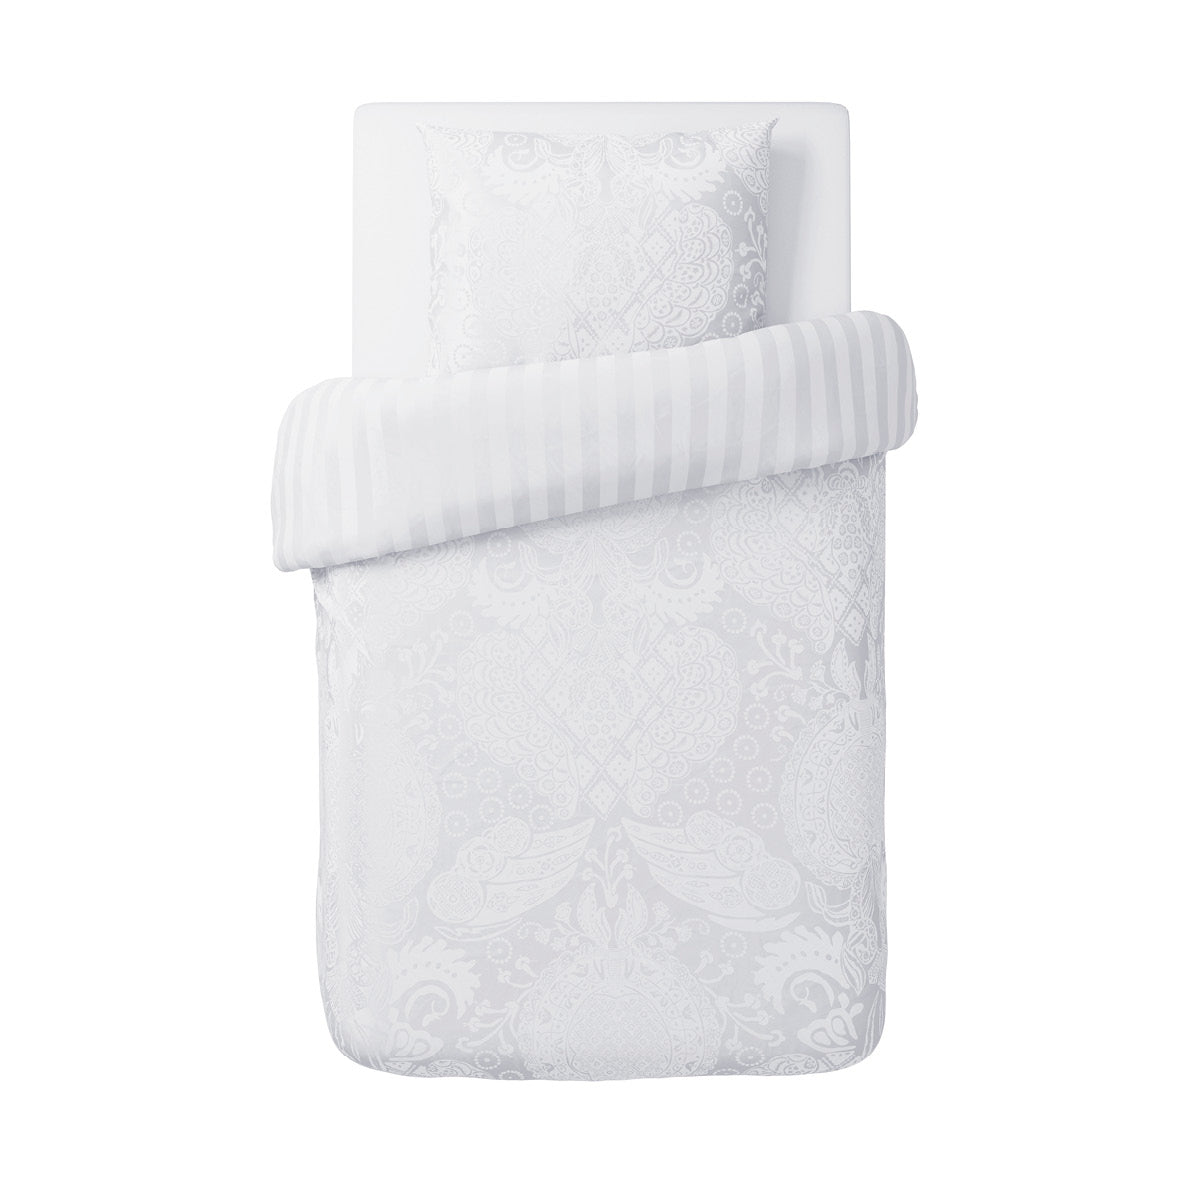 Duvet cover baby + pillowcase cotton satin Jacquard woven - Arles White